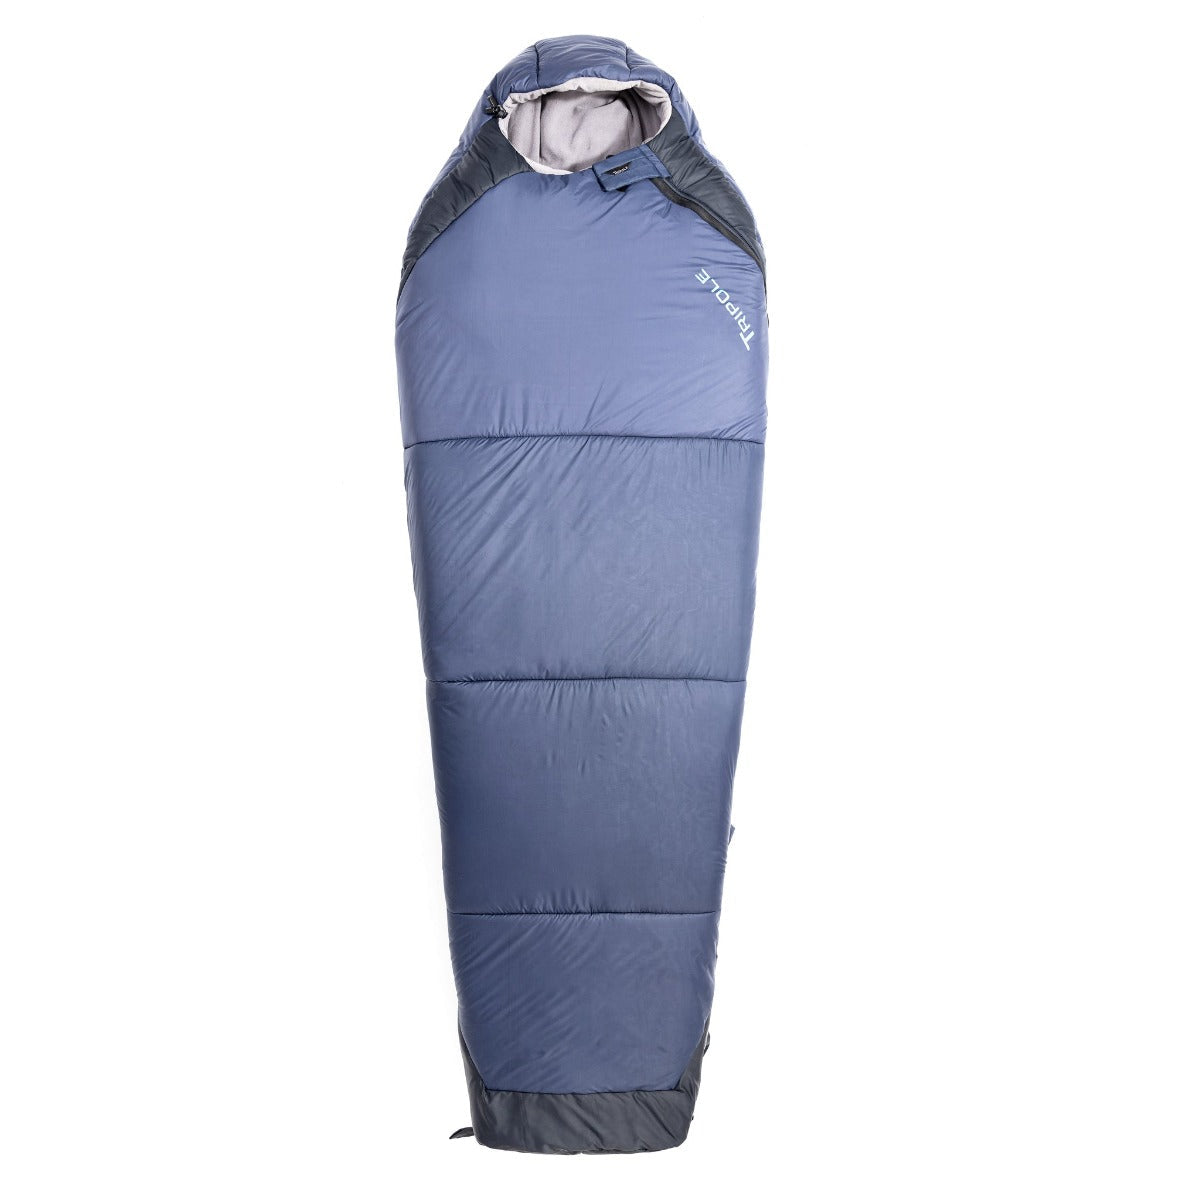 Zanskar Series -5°C Army Sleeping Bag with Fleece Inner 1